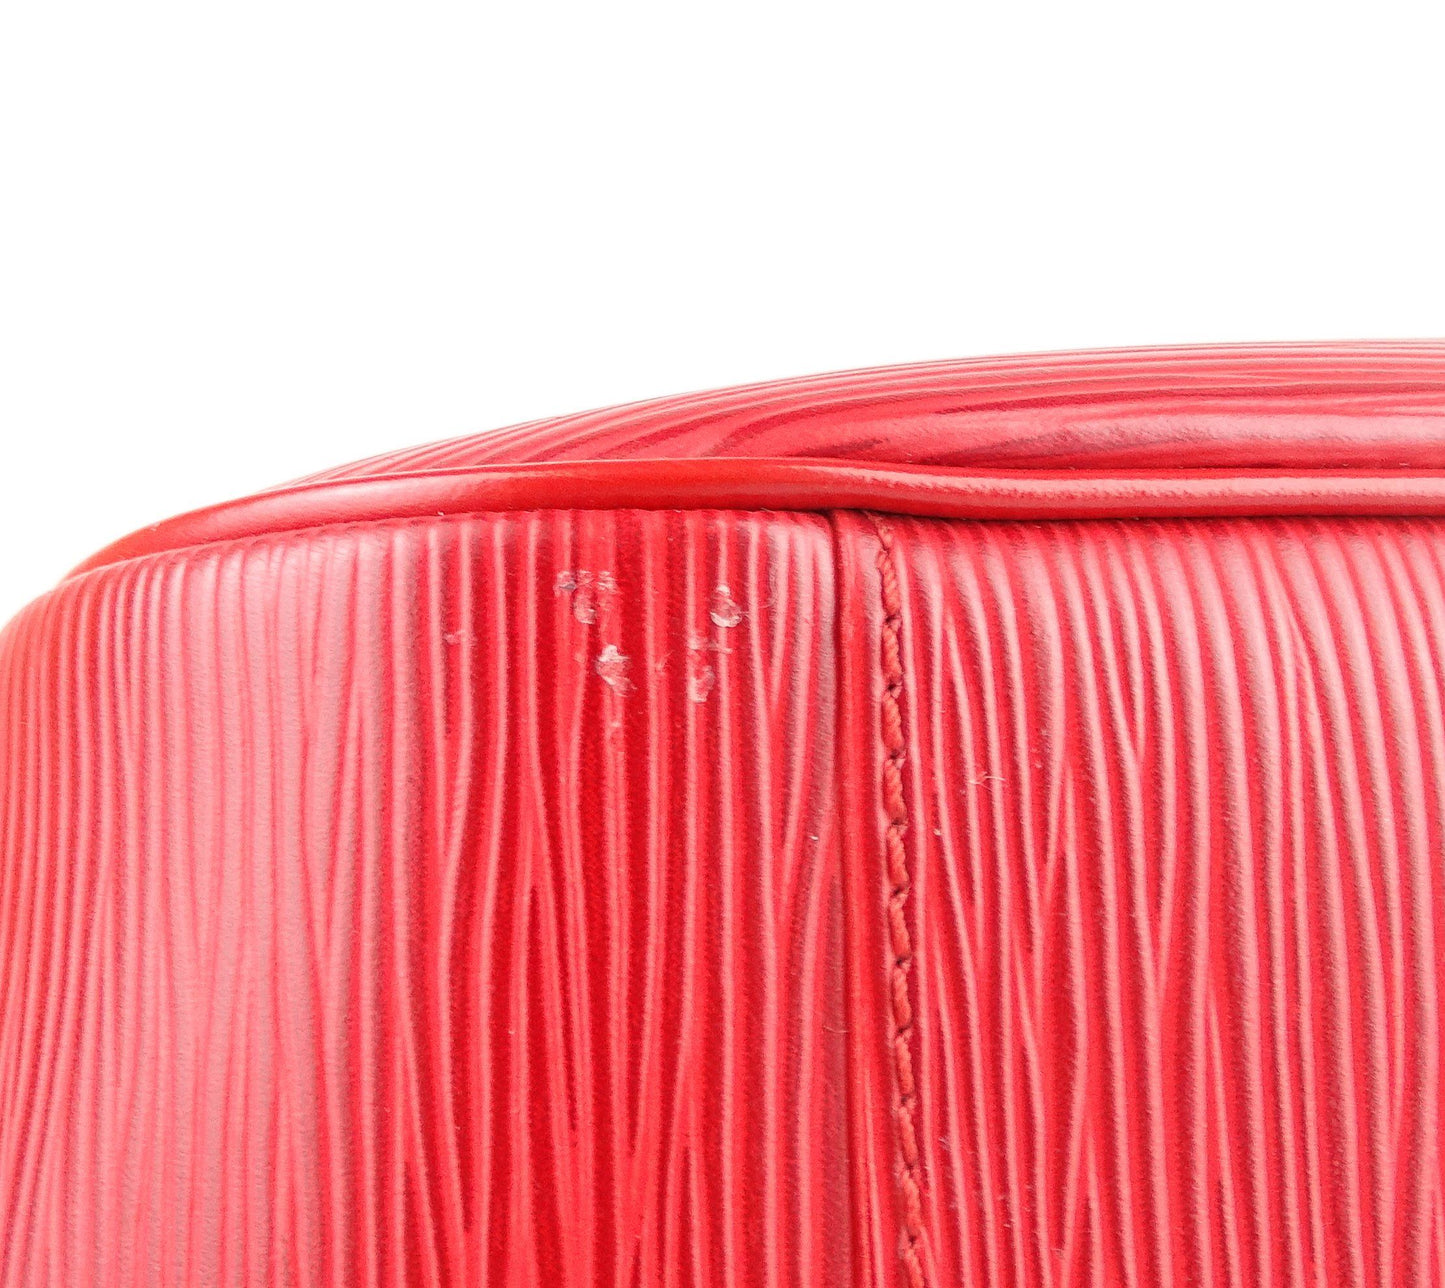 Louis Vuitton Red Epi Leather Passy MM Bags Louis Vuitton 